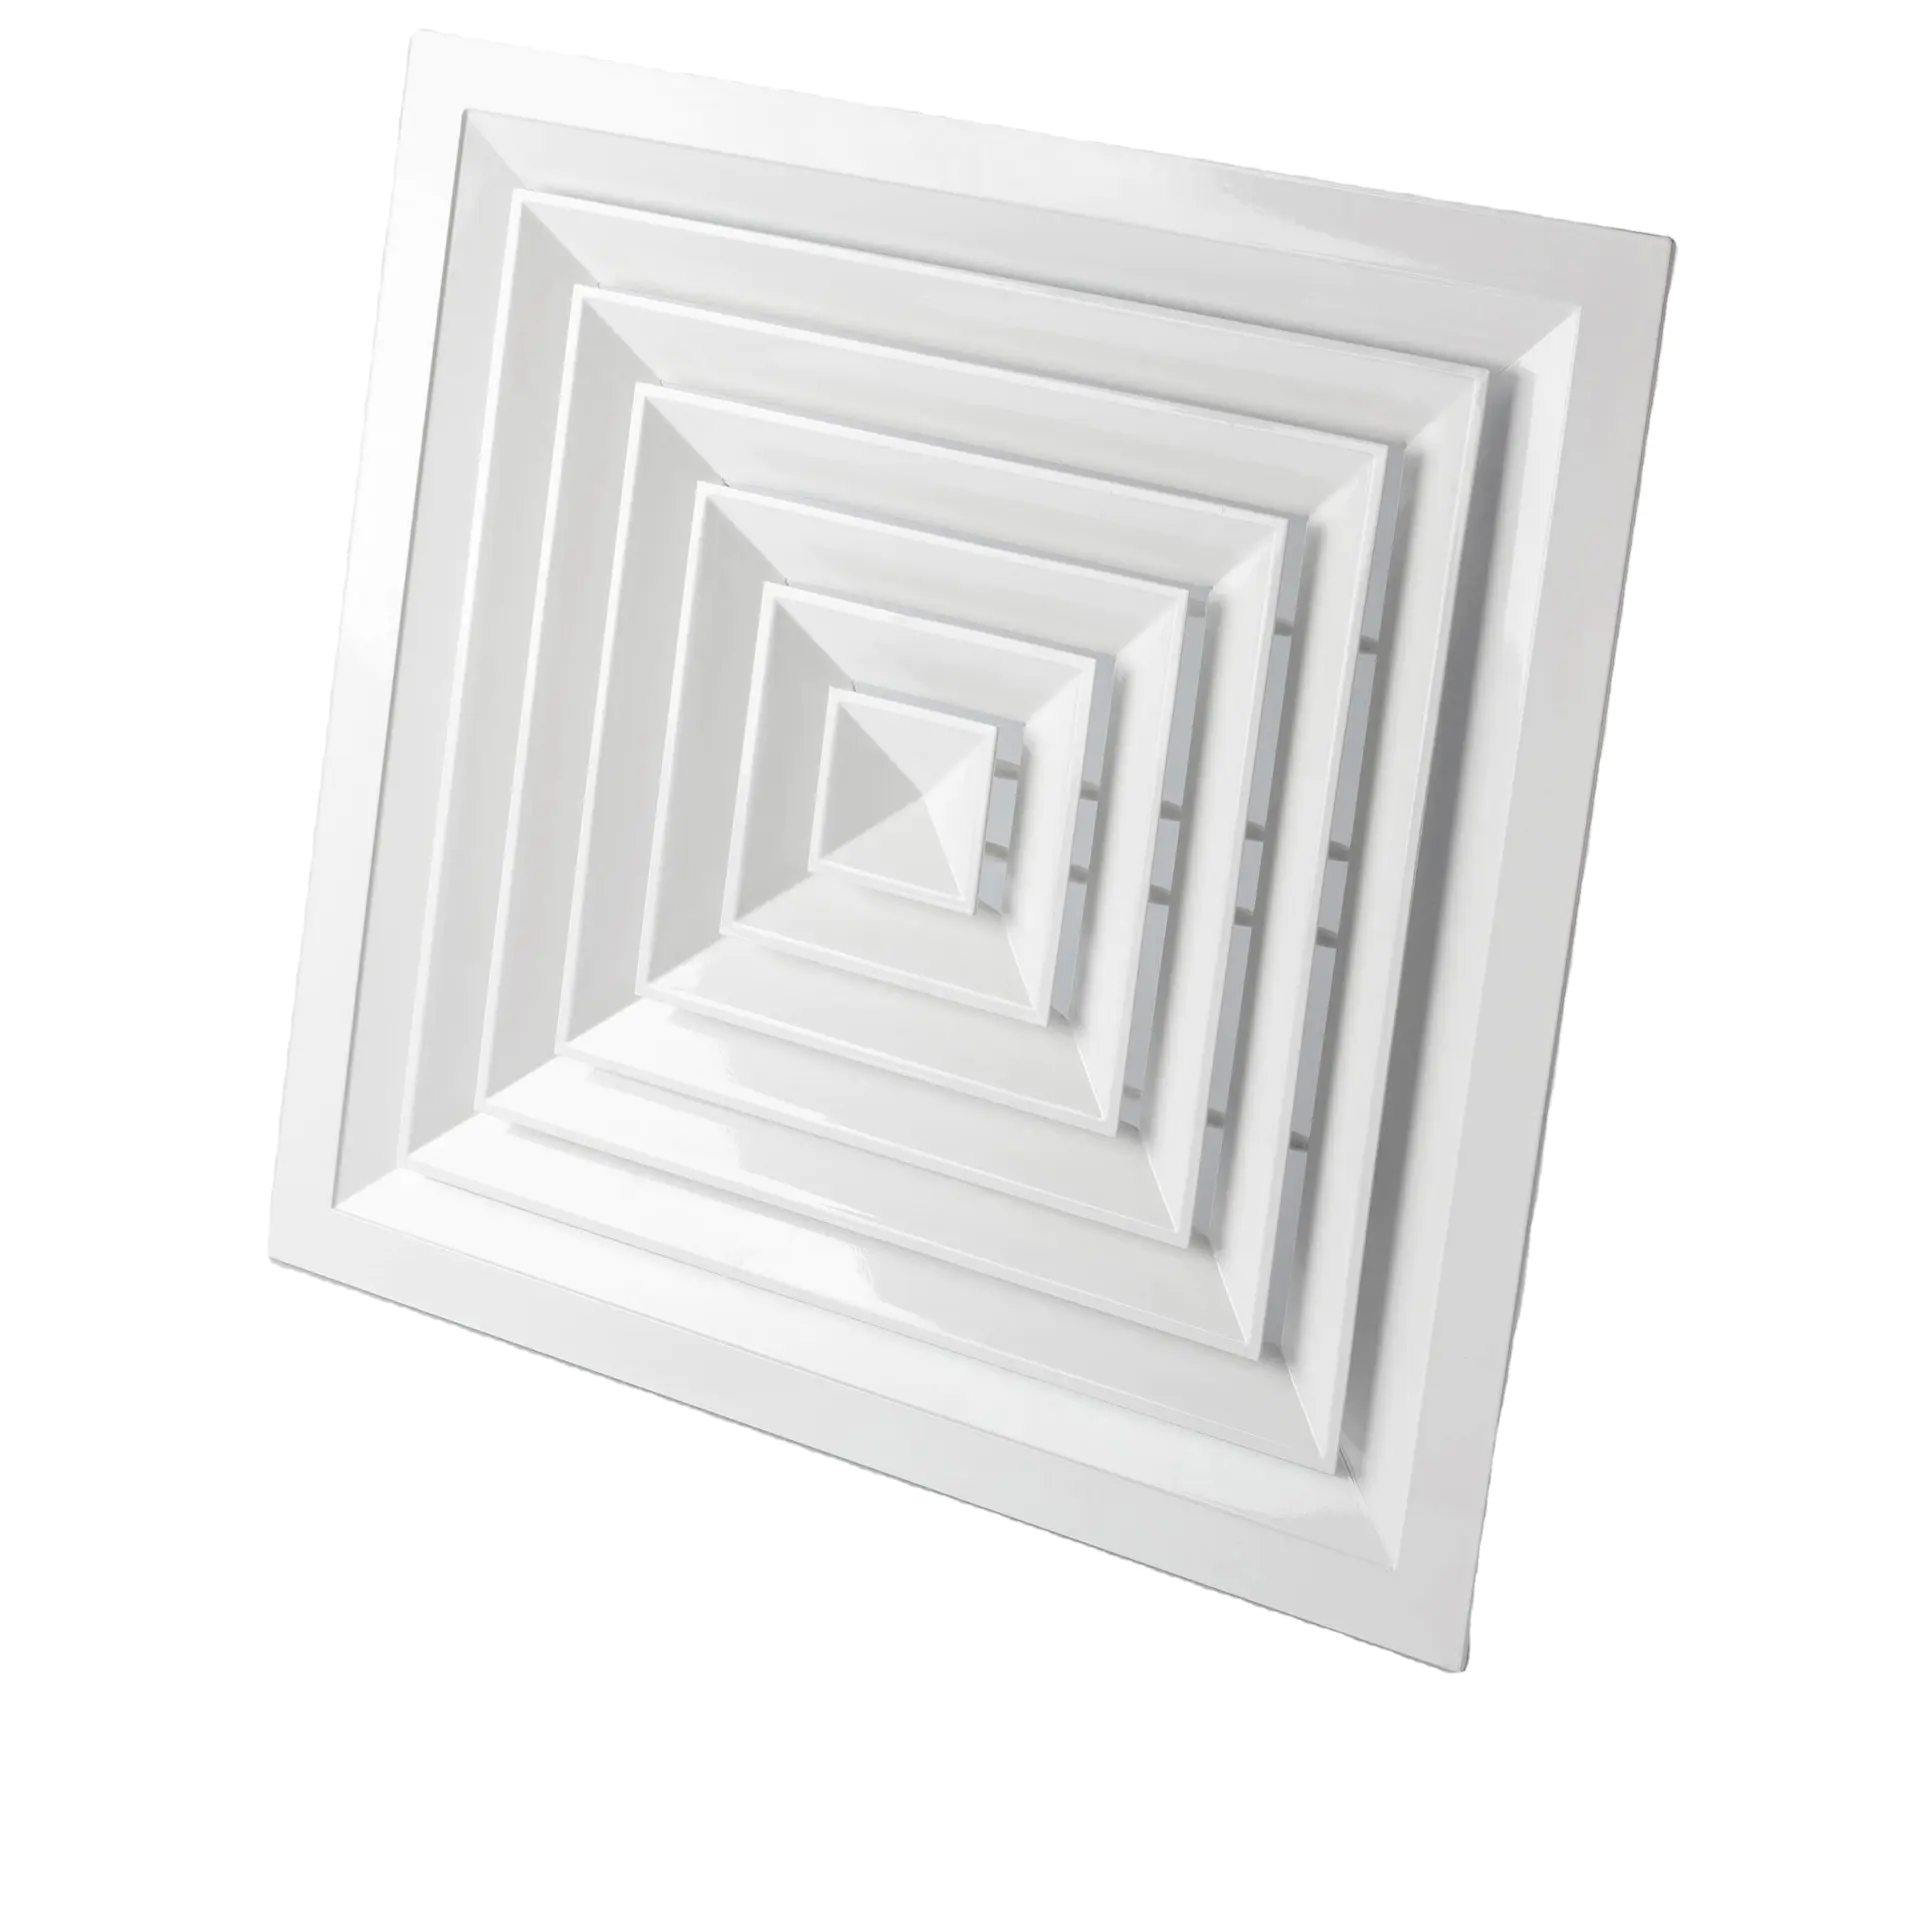 HVAC system ventilation aluminum supply air 4 way ceiling square diffuser with adjustable volume control damper